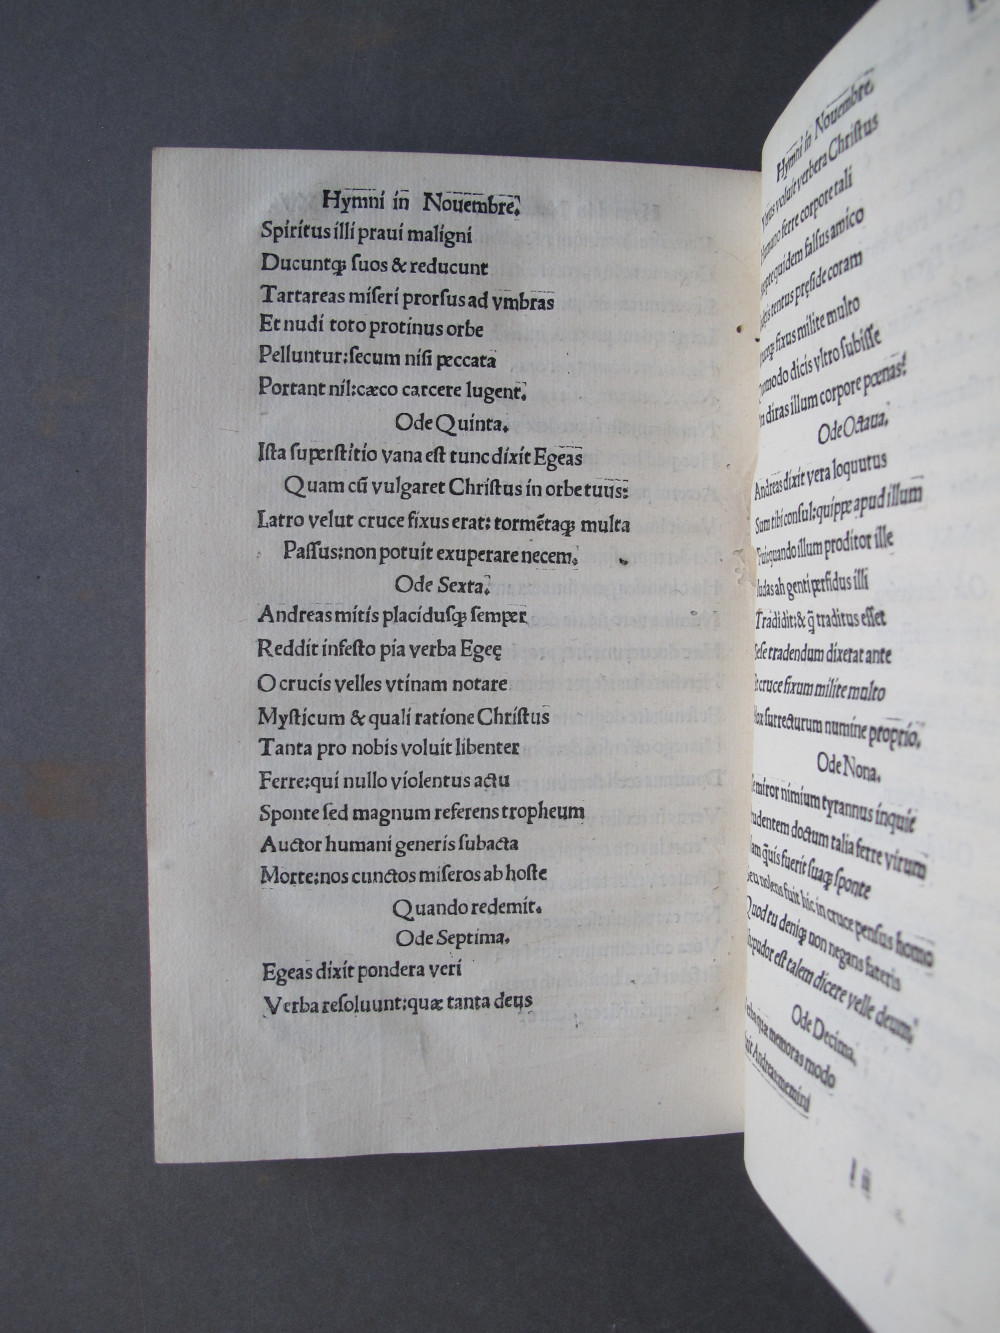 Folio 65 verso